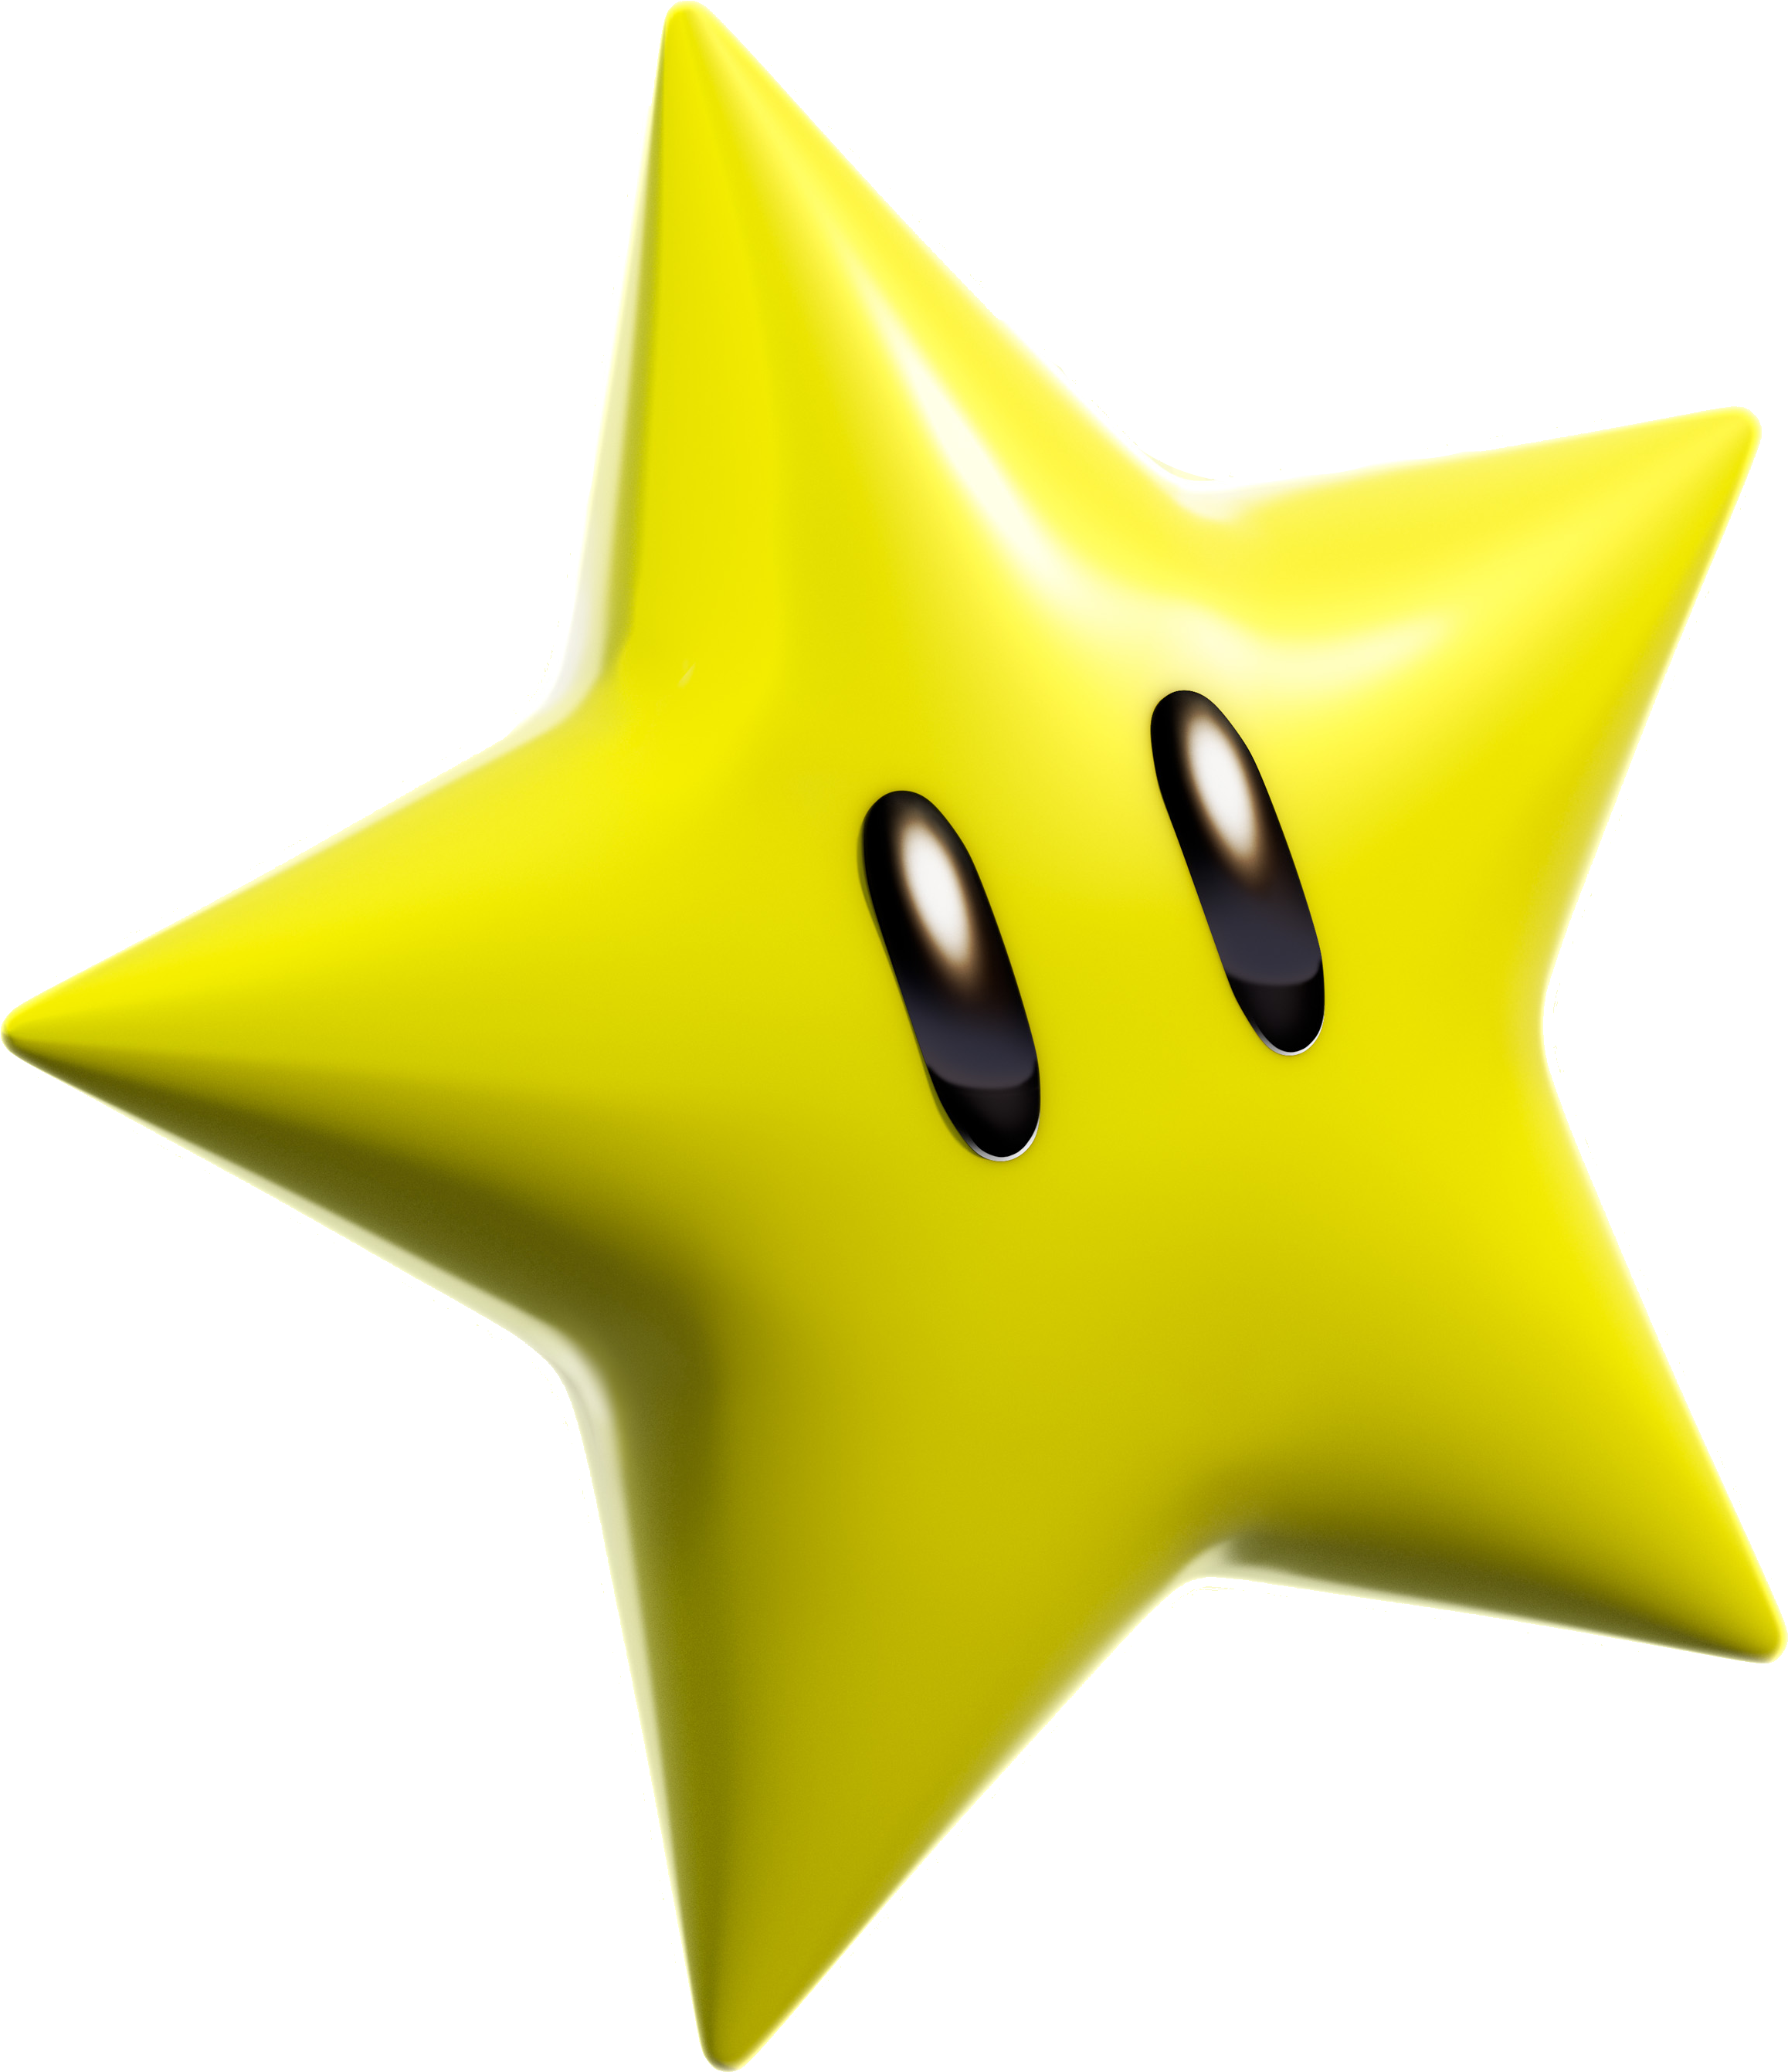 Super Star - Mario Bros. Super Star (2428x2748)